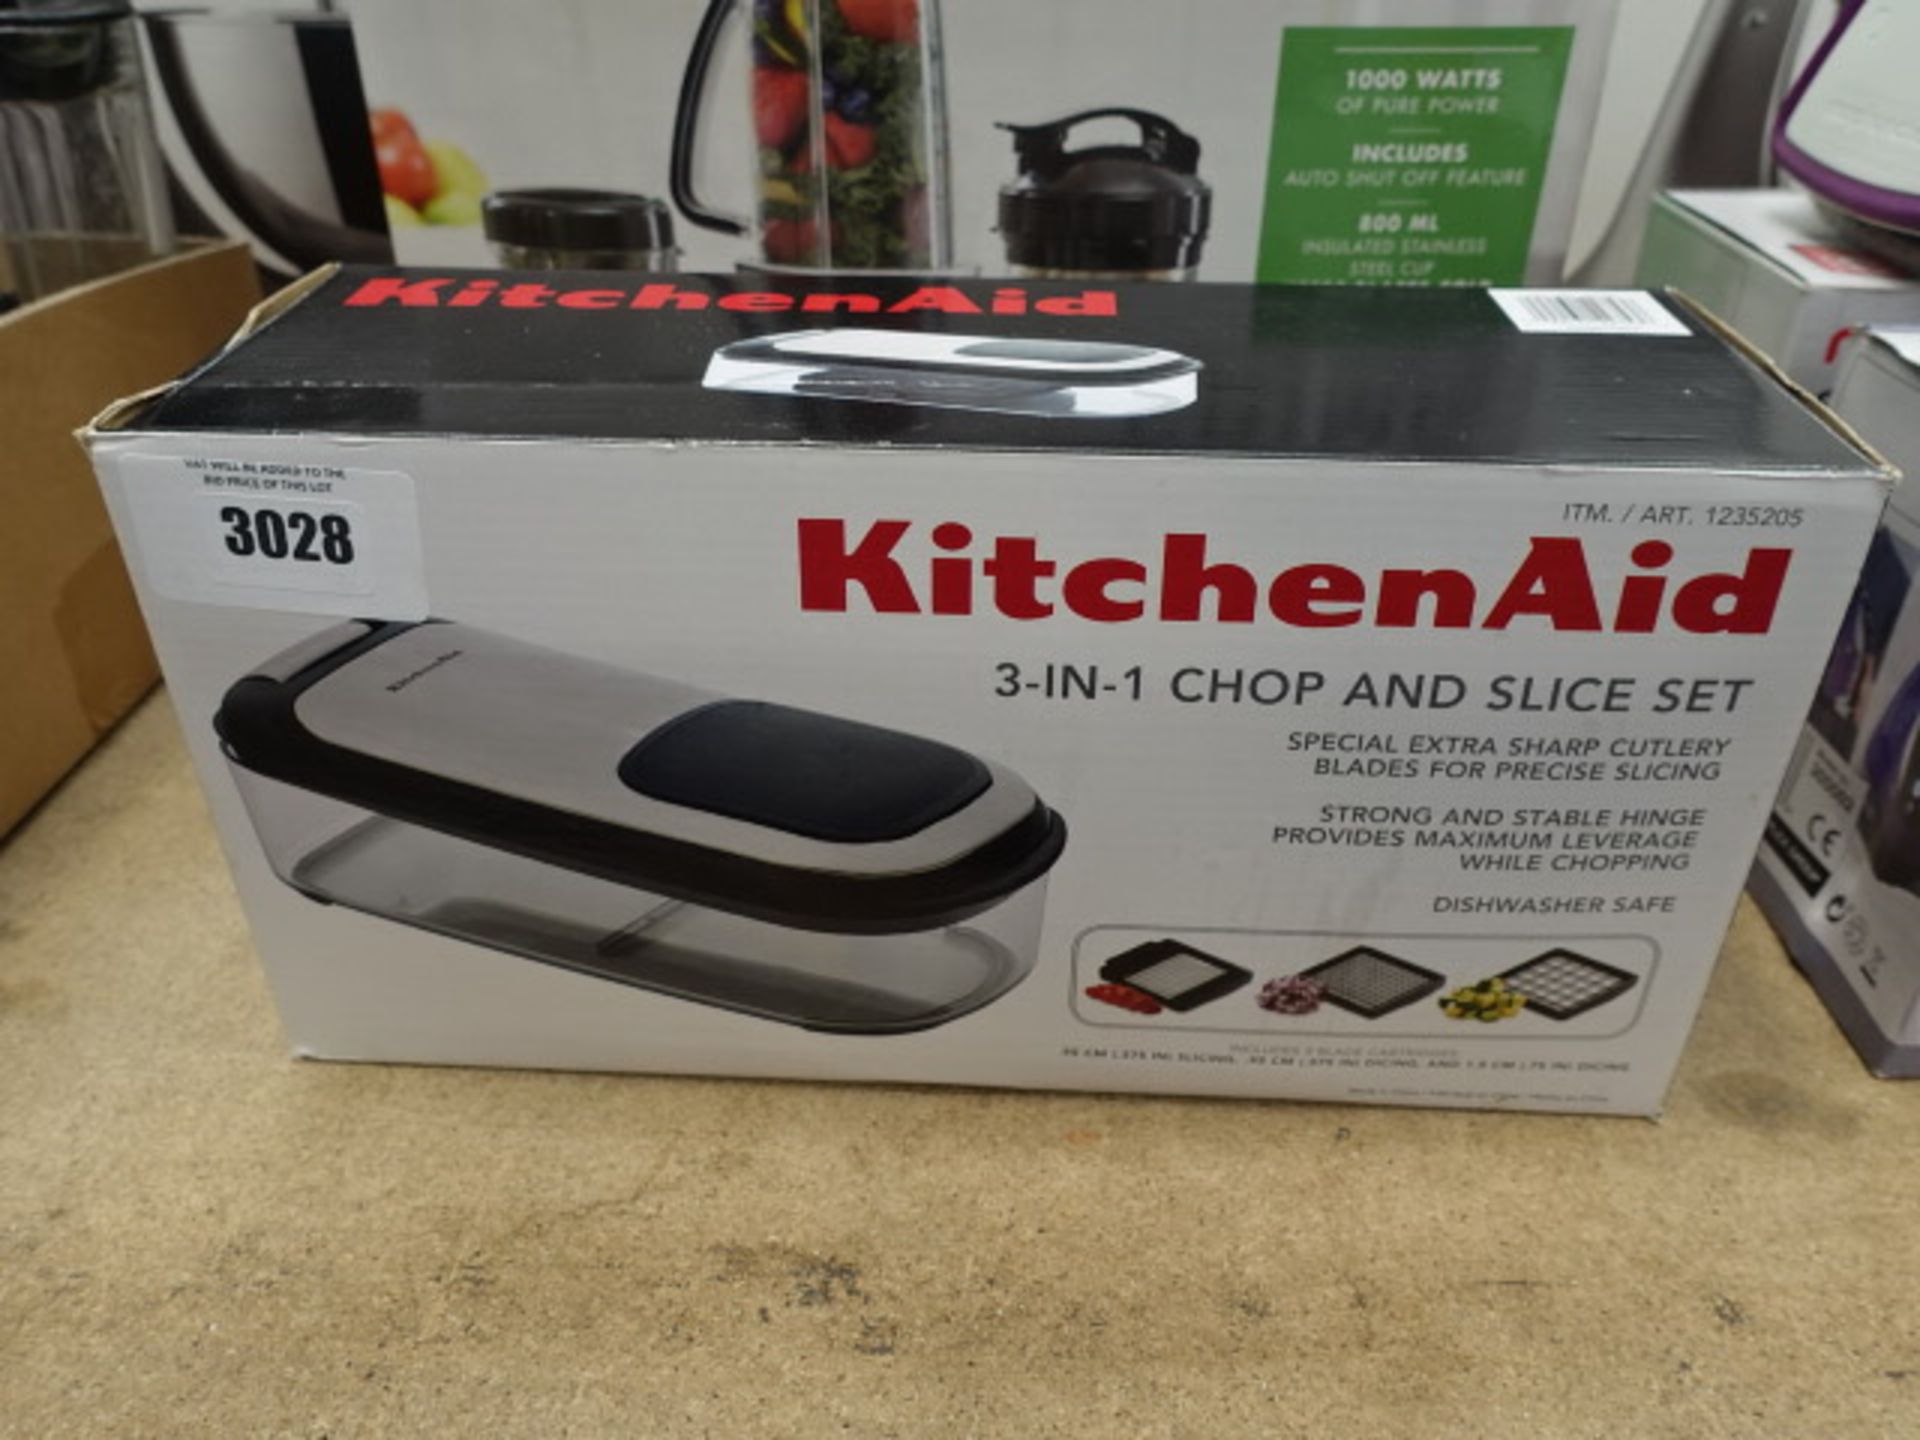 Boxed Kitchenaid 3 in 1 chop and slice set